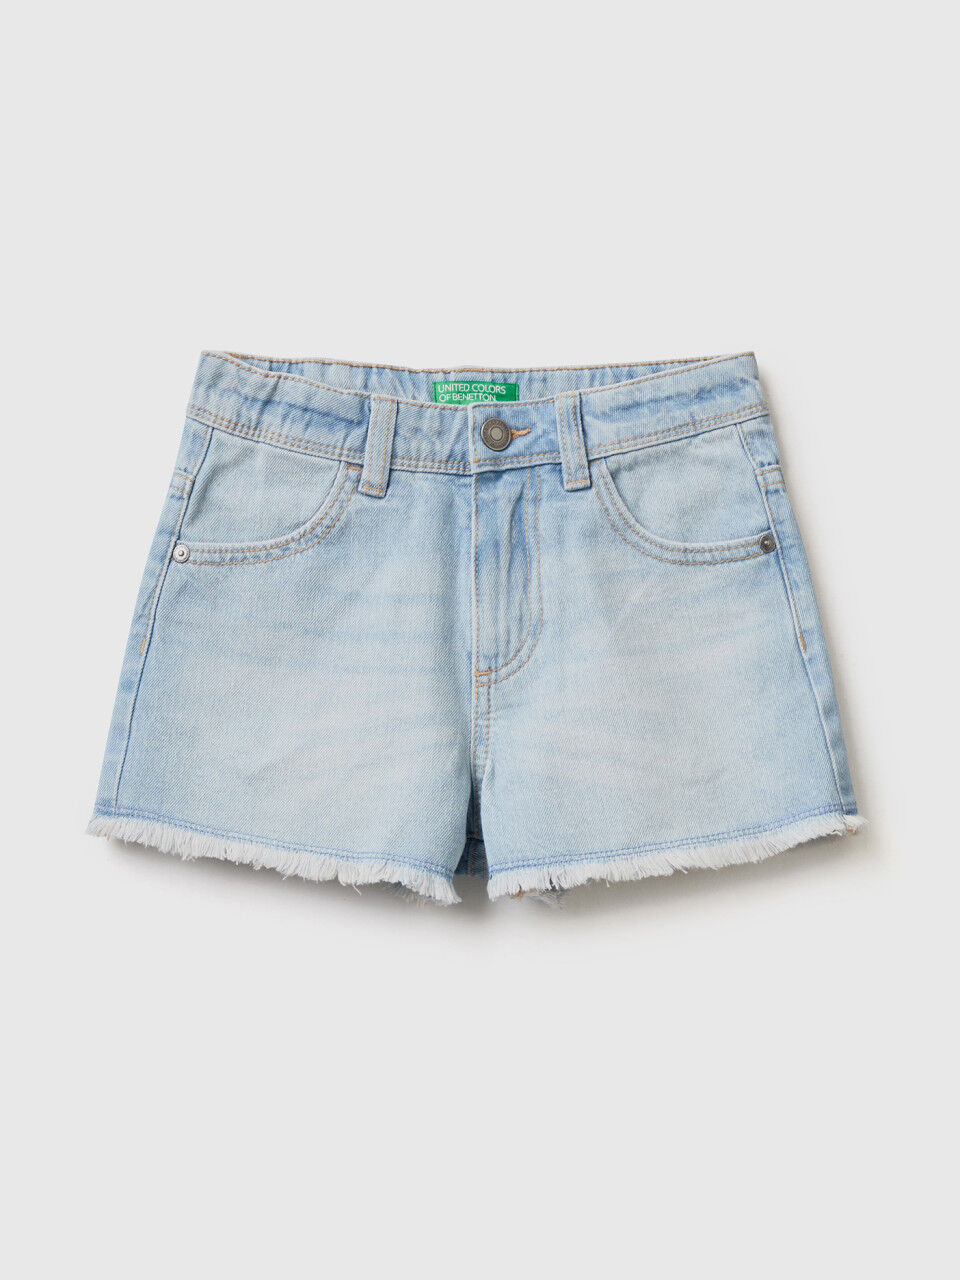 Frayed jean shorts